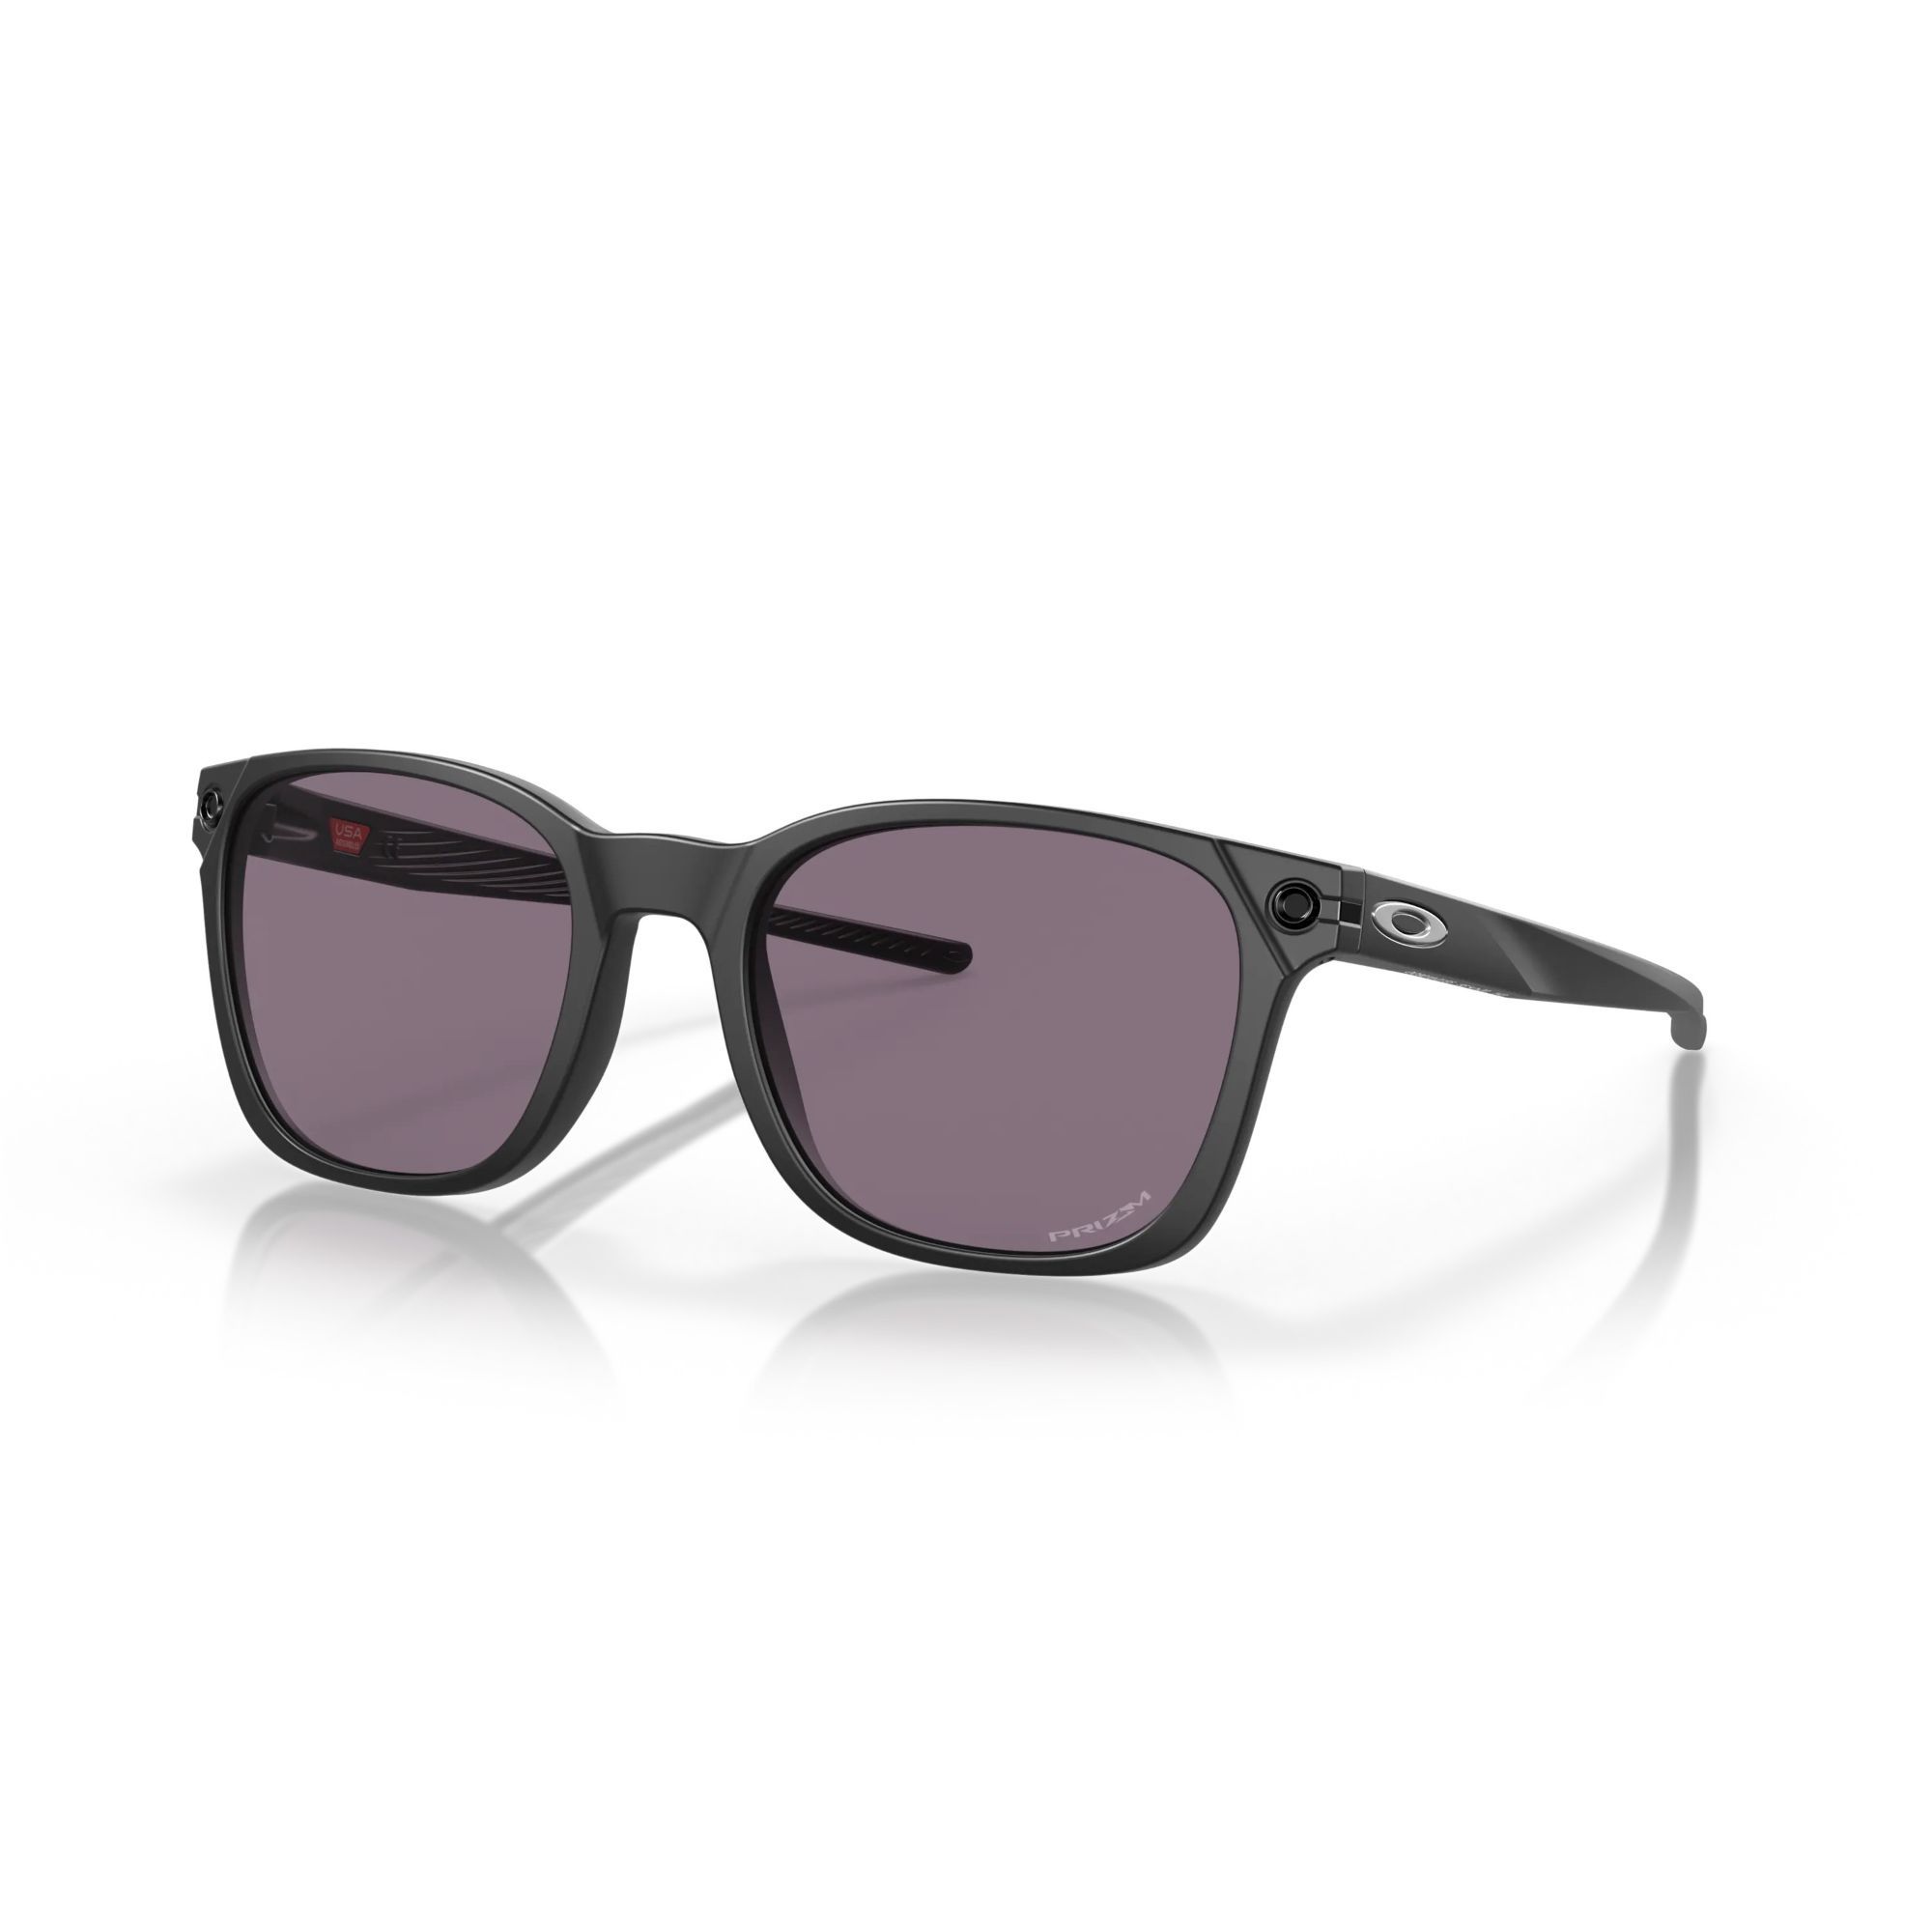 0OO9018 Rectangle Sunglasses 901801 - size 55